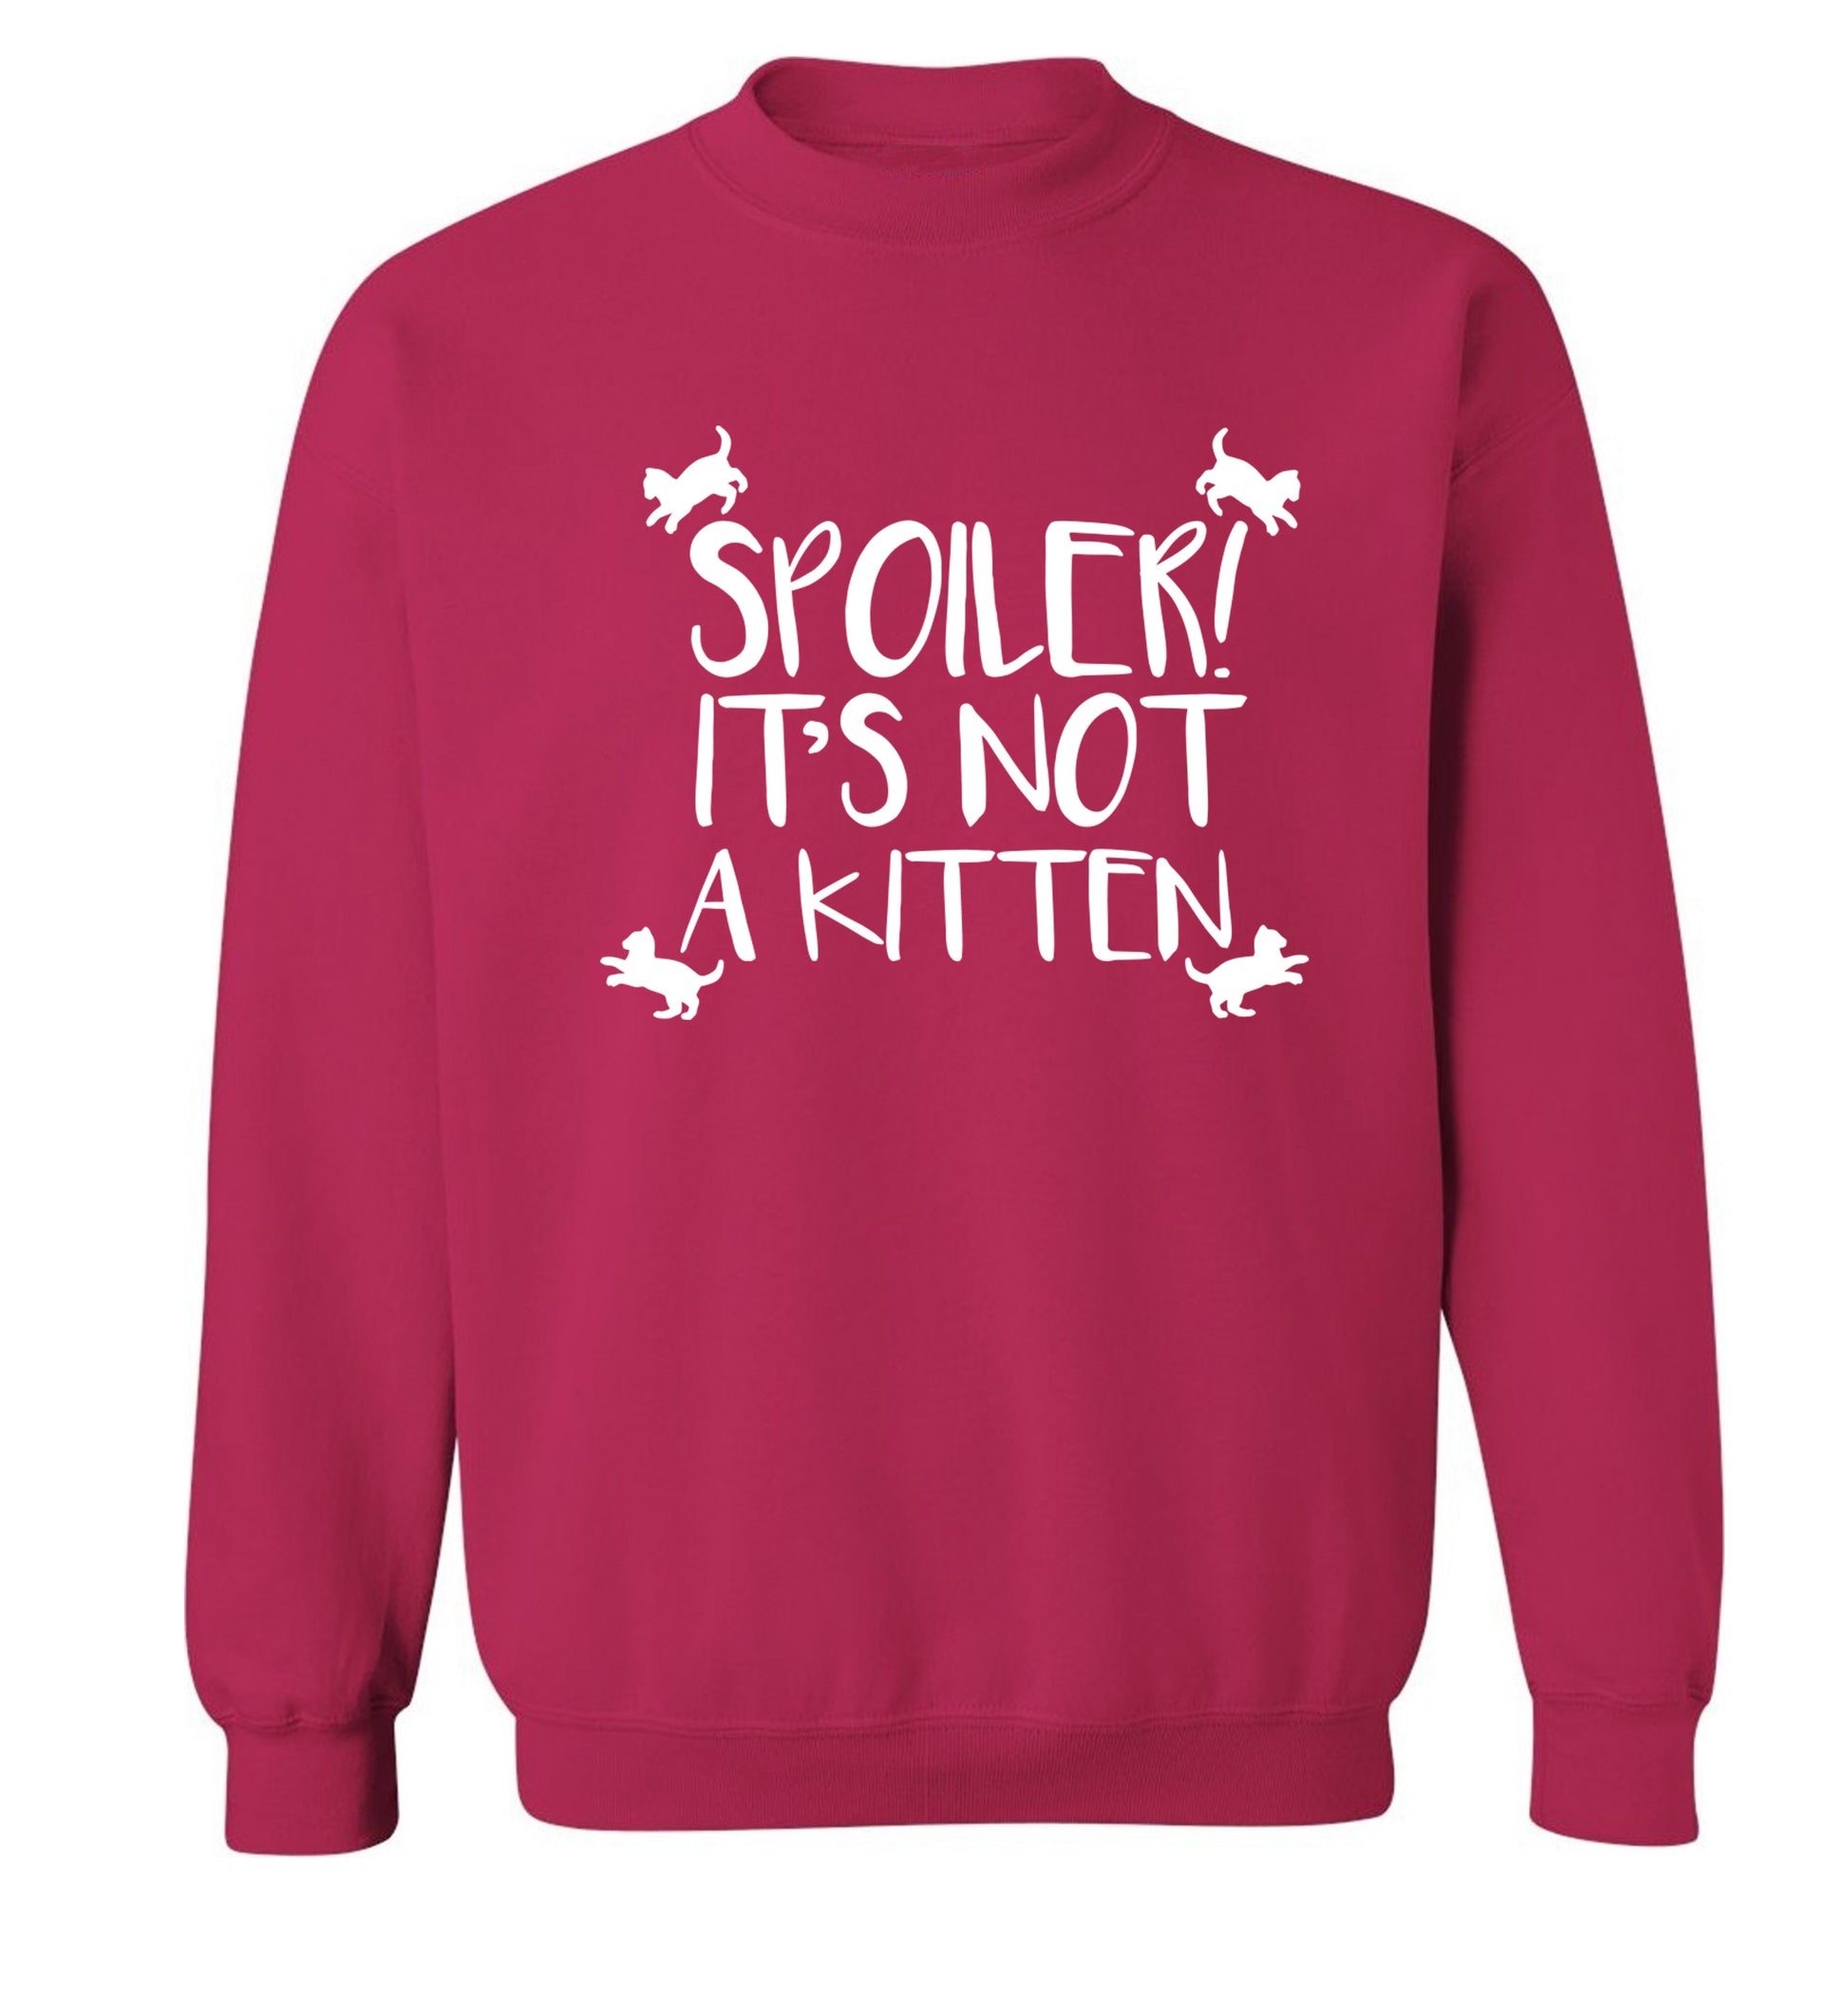 Spoiler it's not a kitten Adult's unisex pink Sweater 2XL